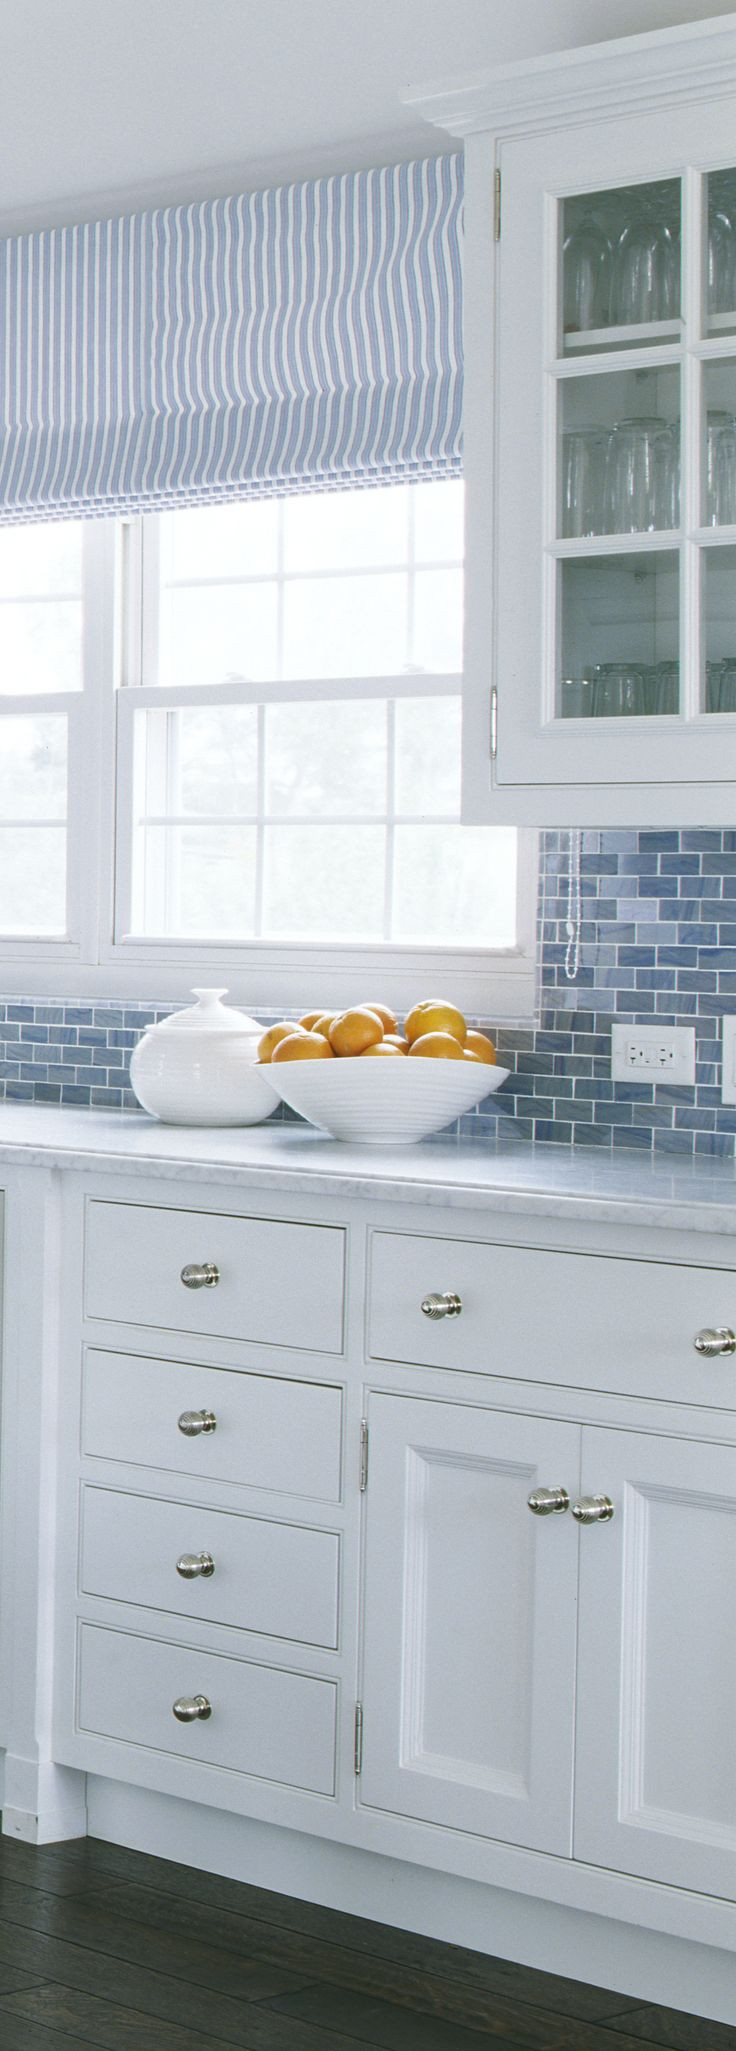 Blue And White Kitchen Tiles
 Coastal Kitchen Hardware Check